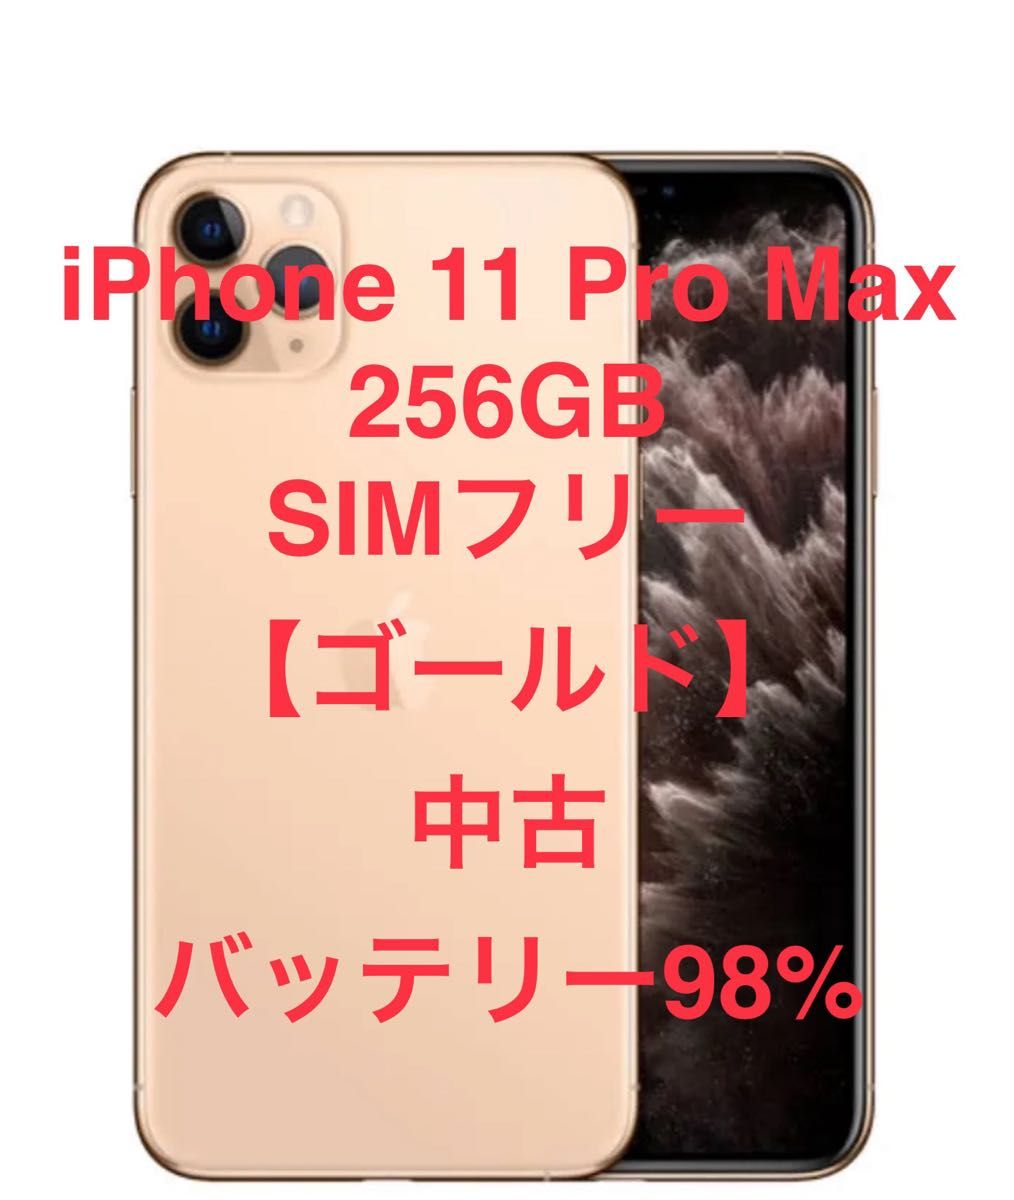 iPhone 11 Pro Max 256GB SIMフリー【ゴールド】美品 バッテリー98